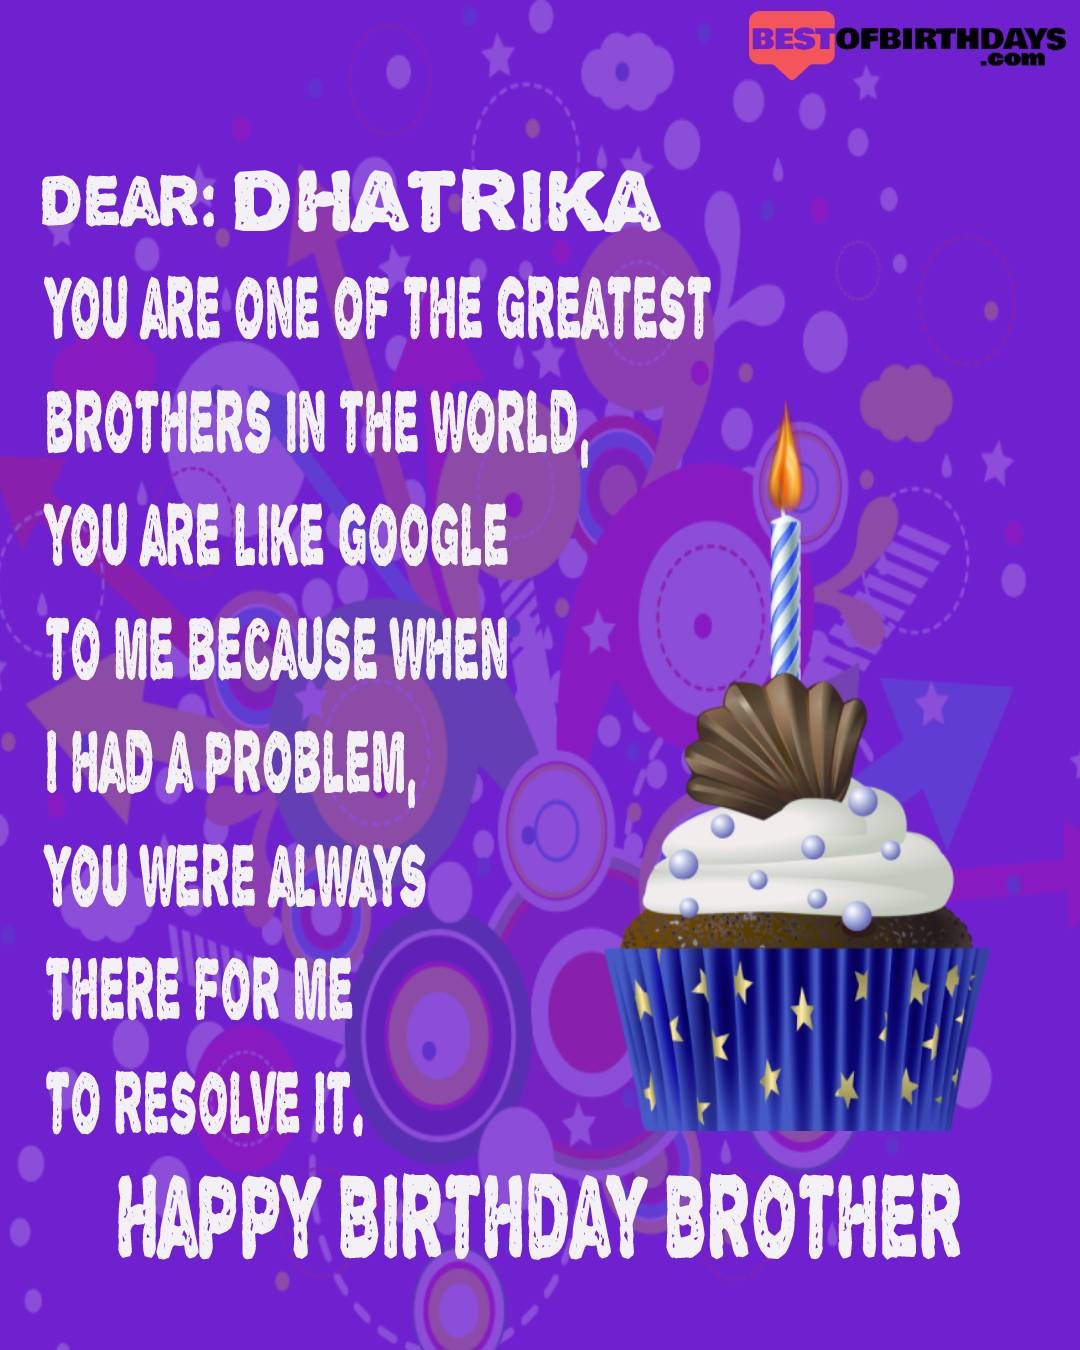 Happy birthday dhatrika bhai brother bro